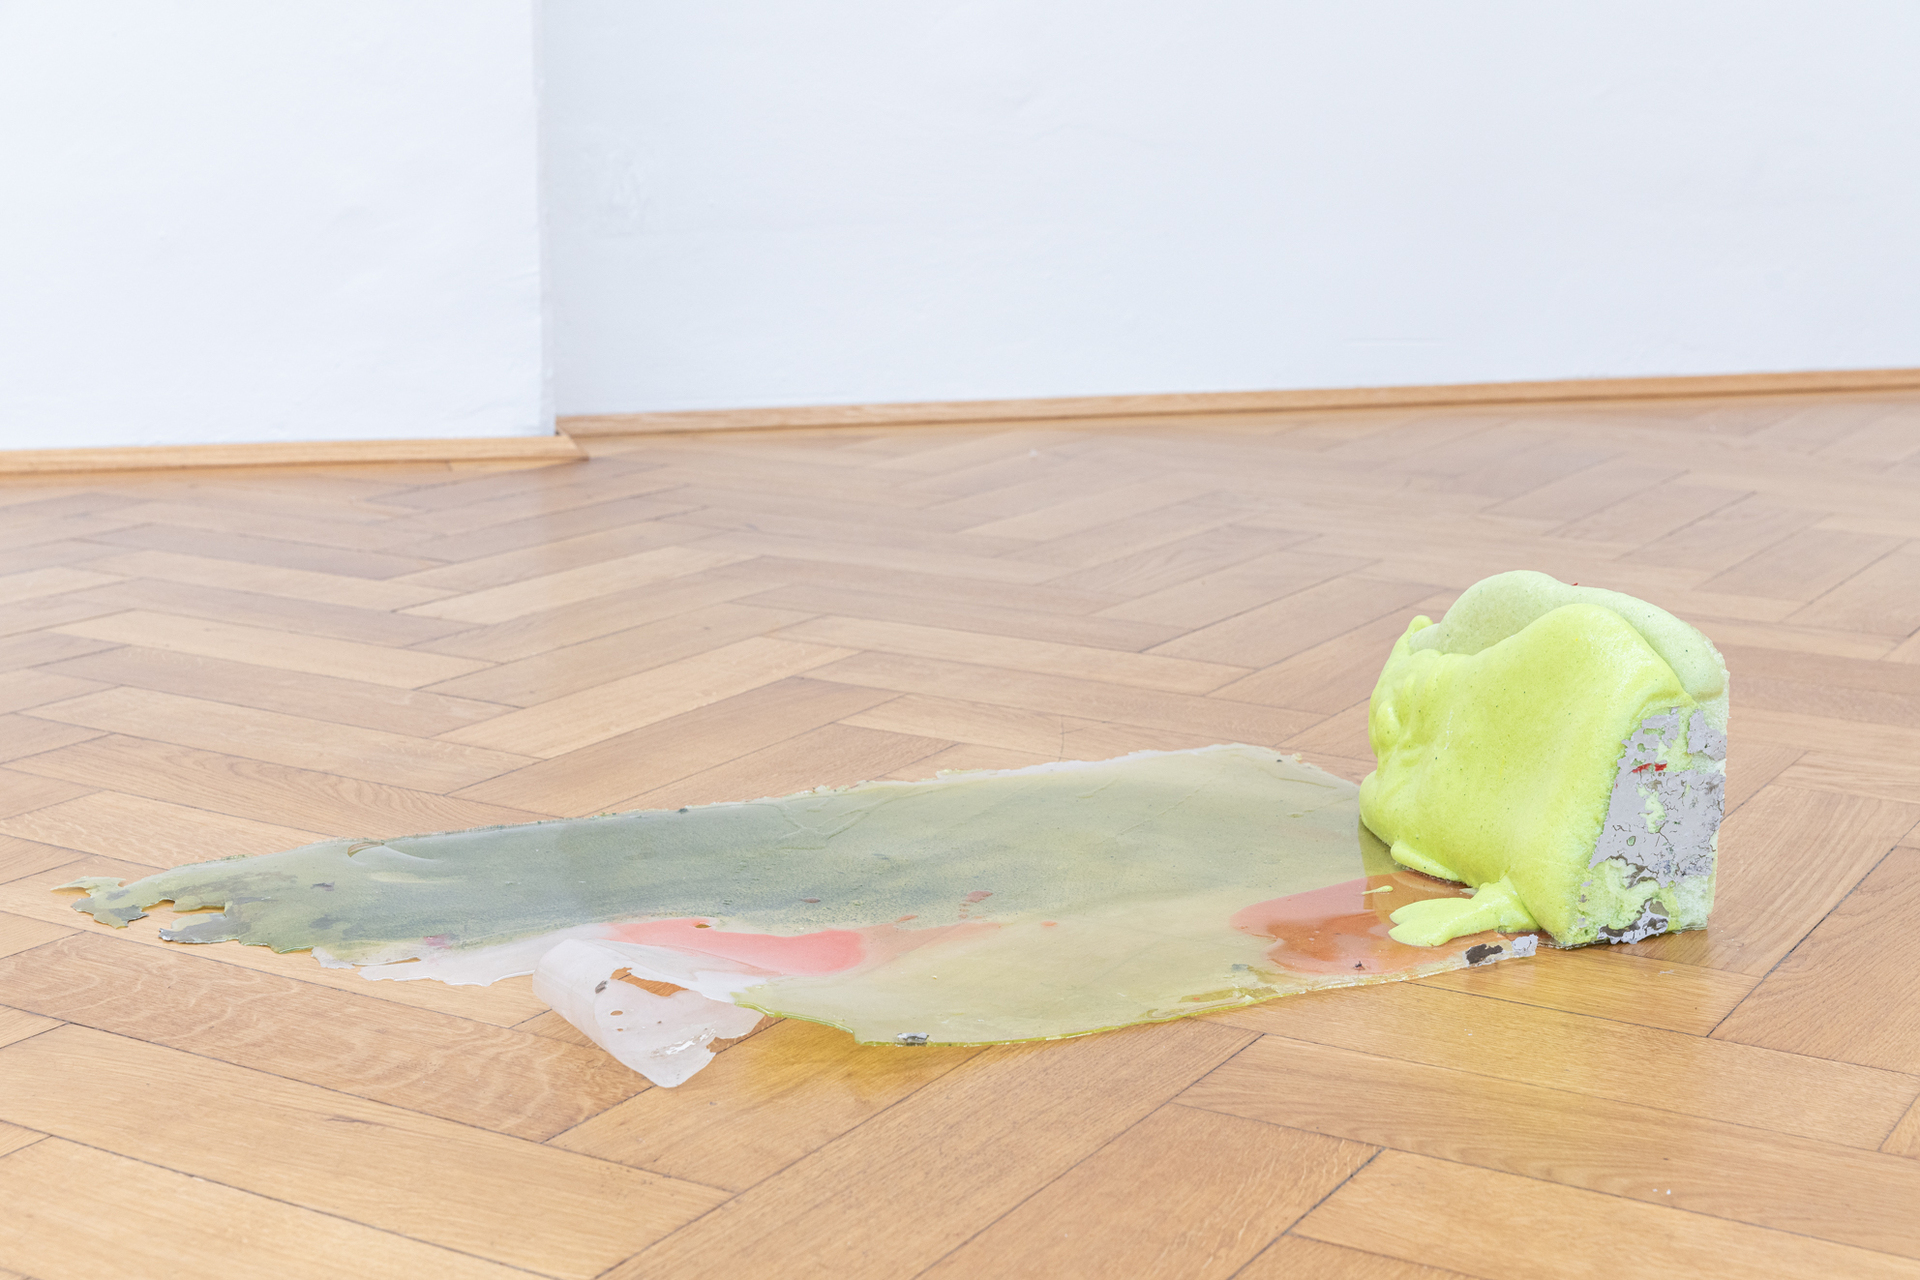 Patrick Ostrowsky, "floor piece", 2021, synthetic resin, pigments, polyurethane, 91 x 53 x 18 cm